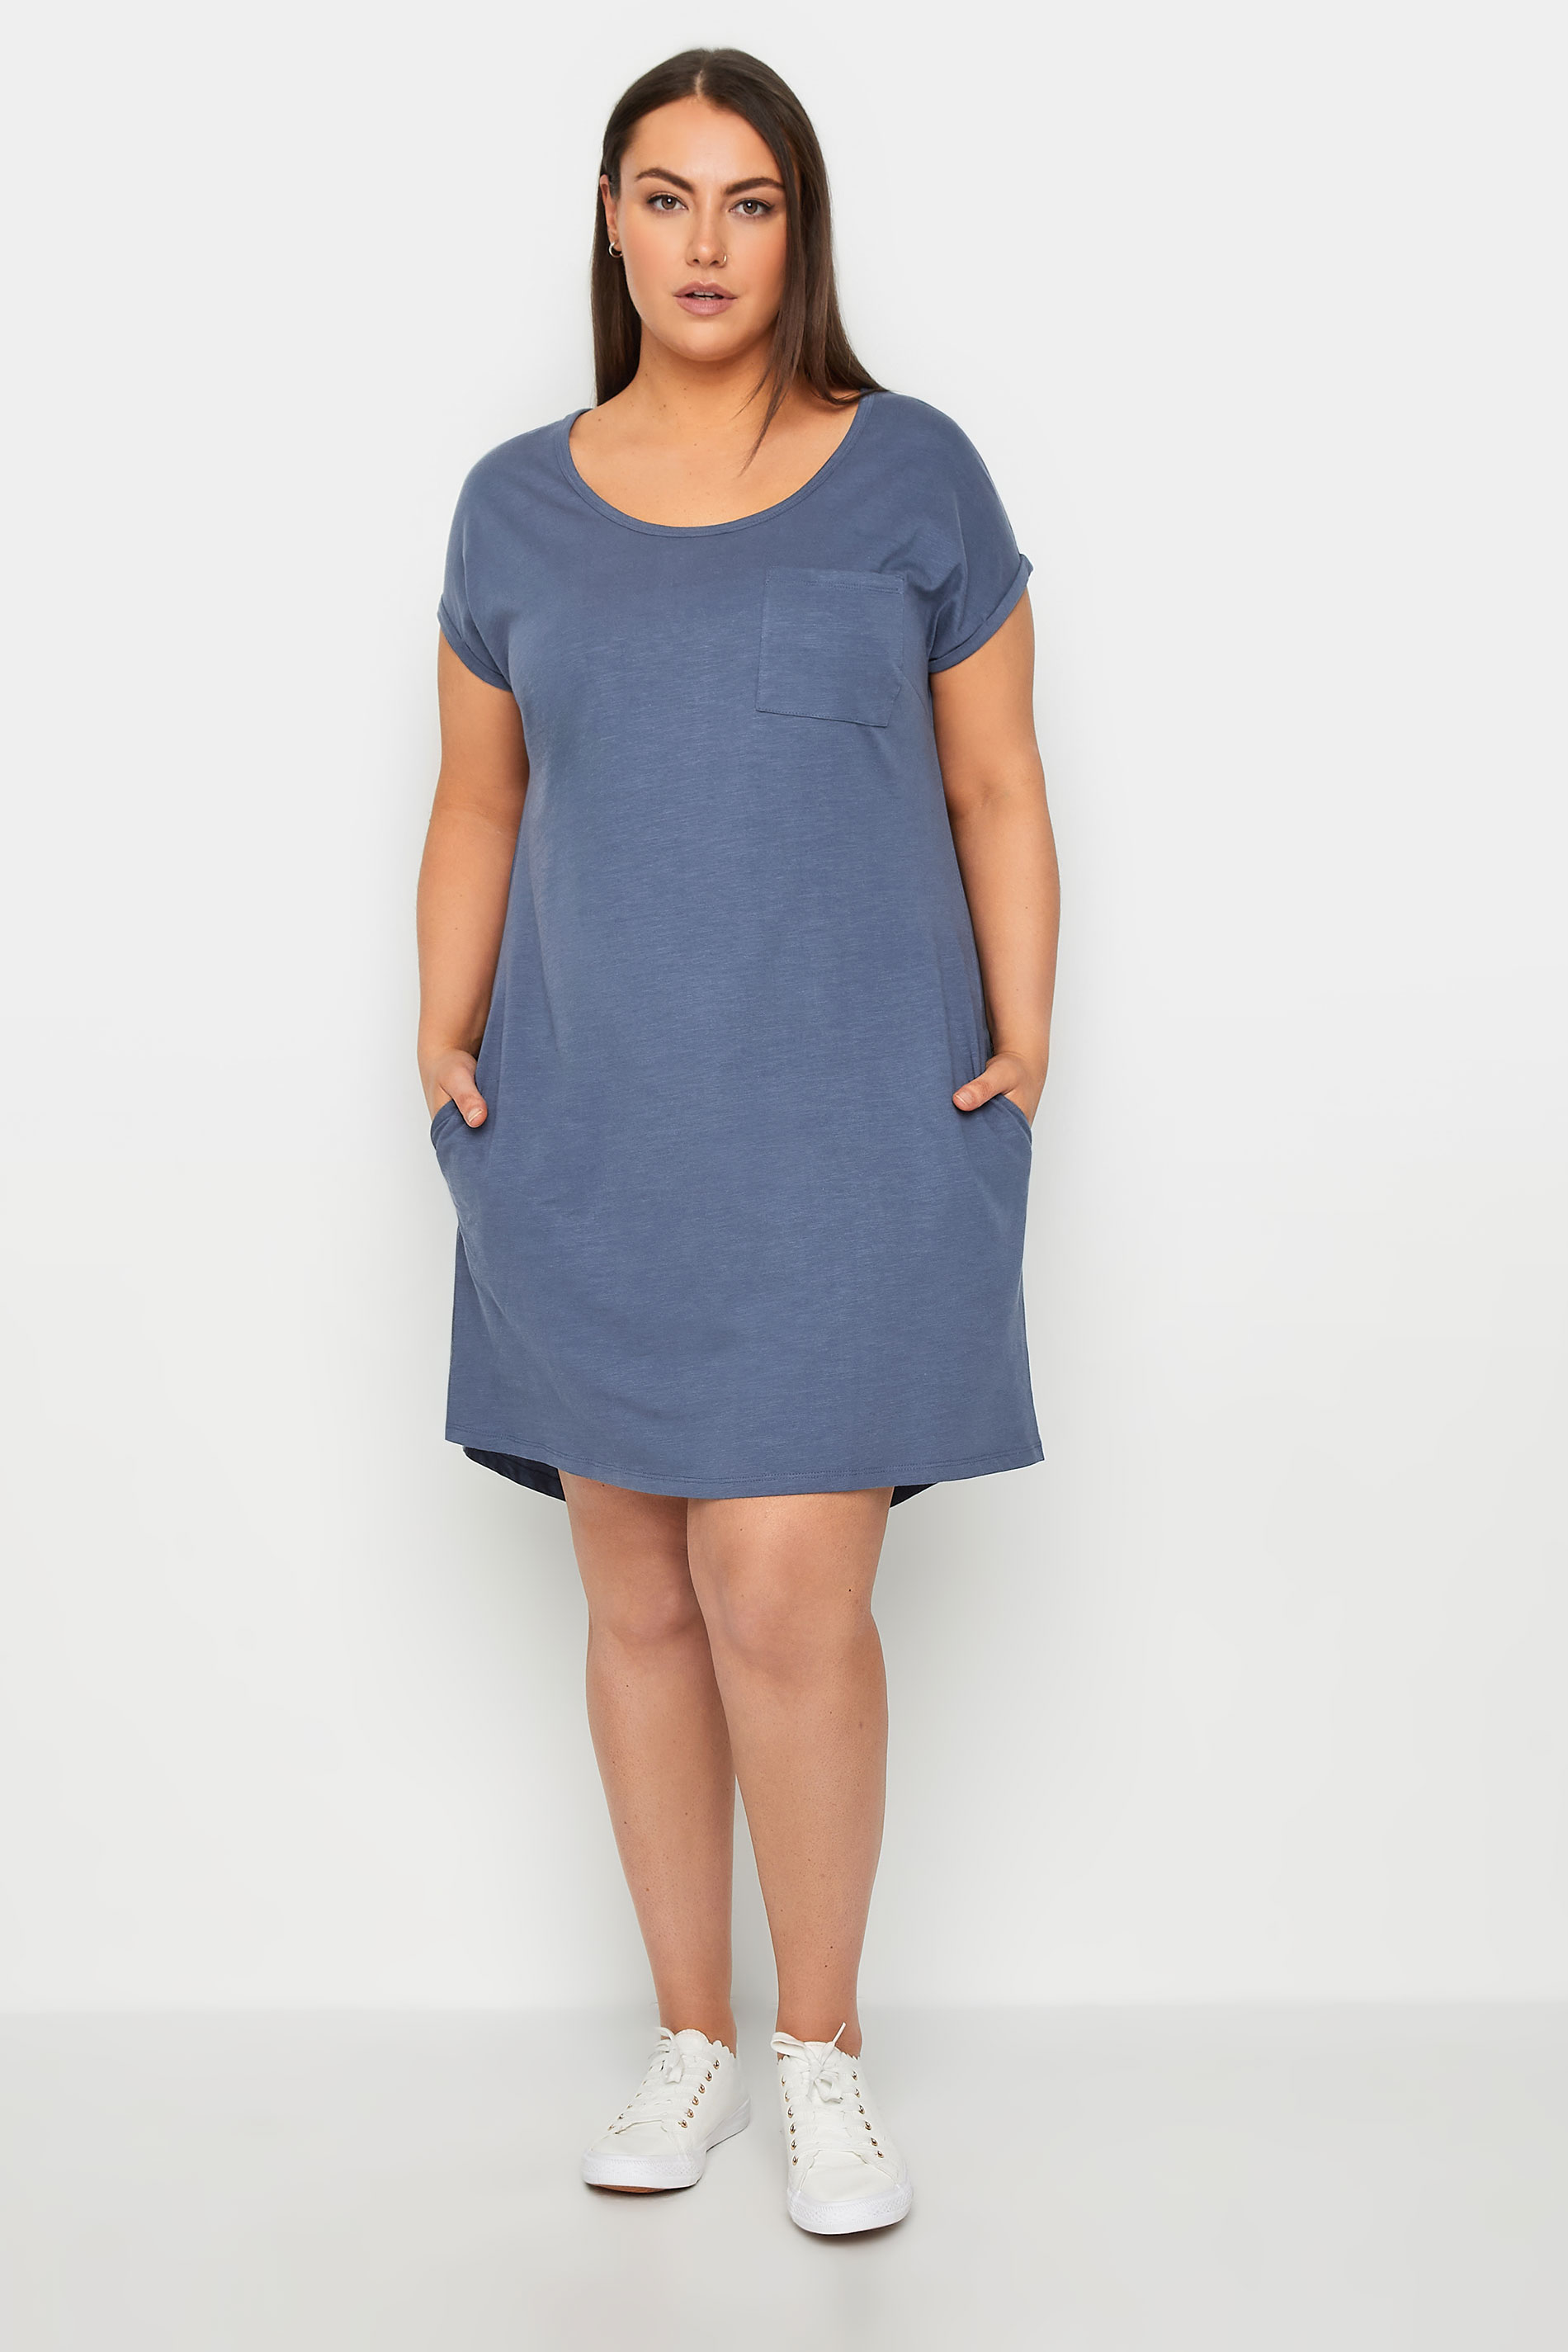 Zim & Zoe Navy Blue Pocket Detail T-Shirt Dress | Evans 1